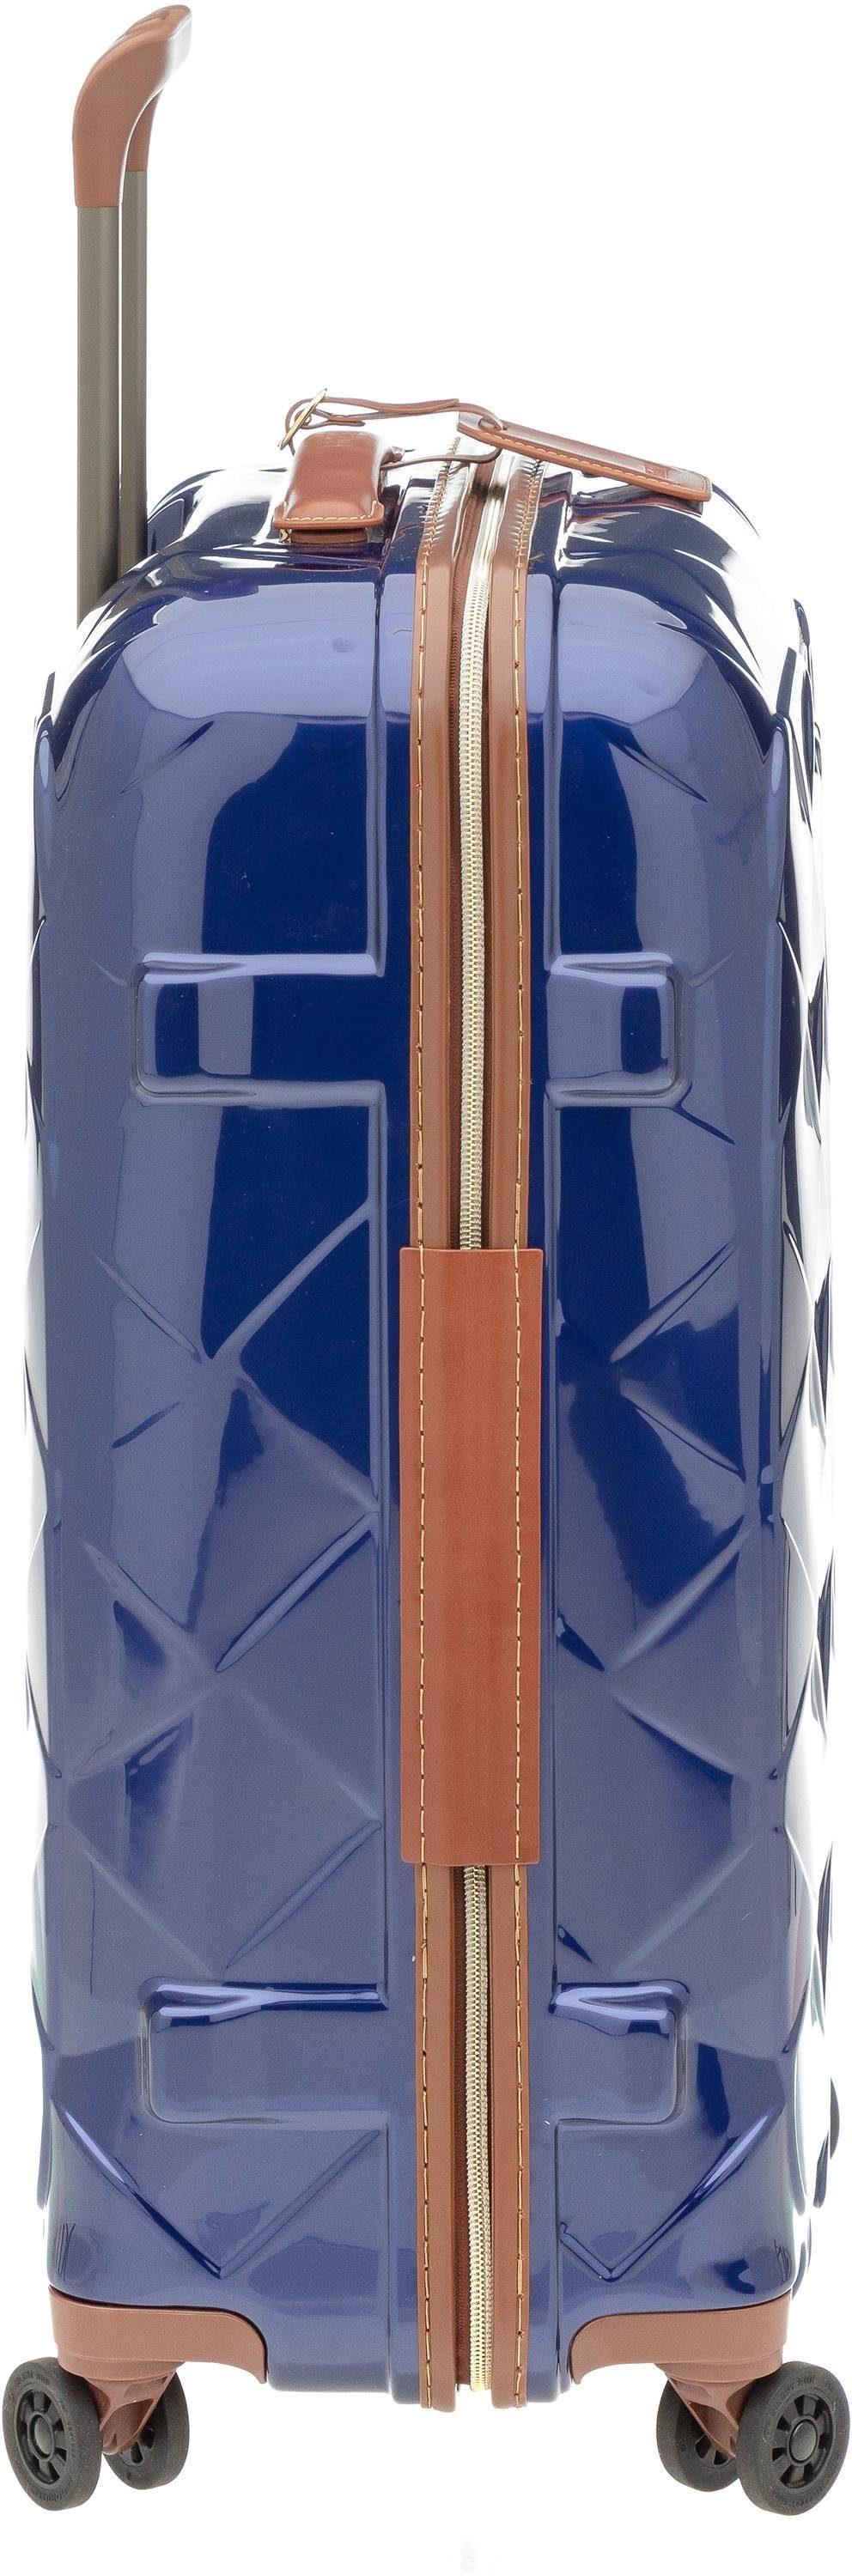 76 Hartschalen-Trolley Rollen blue 4 cm, Stratic Leather & More,